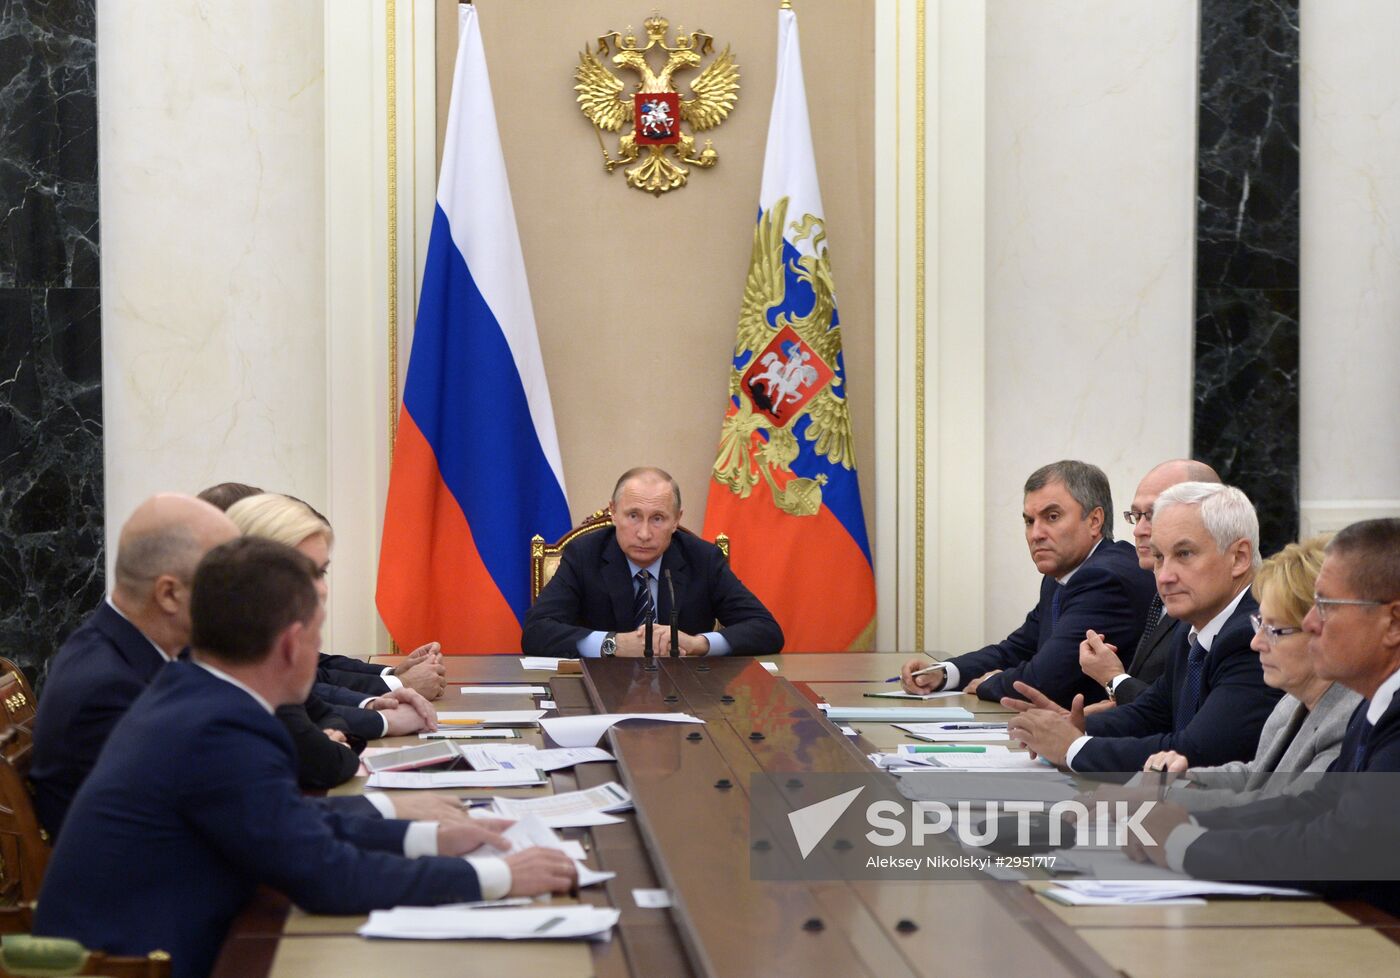 Russian President Vladimir Putin holds meeting on socioeconomic issues